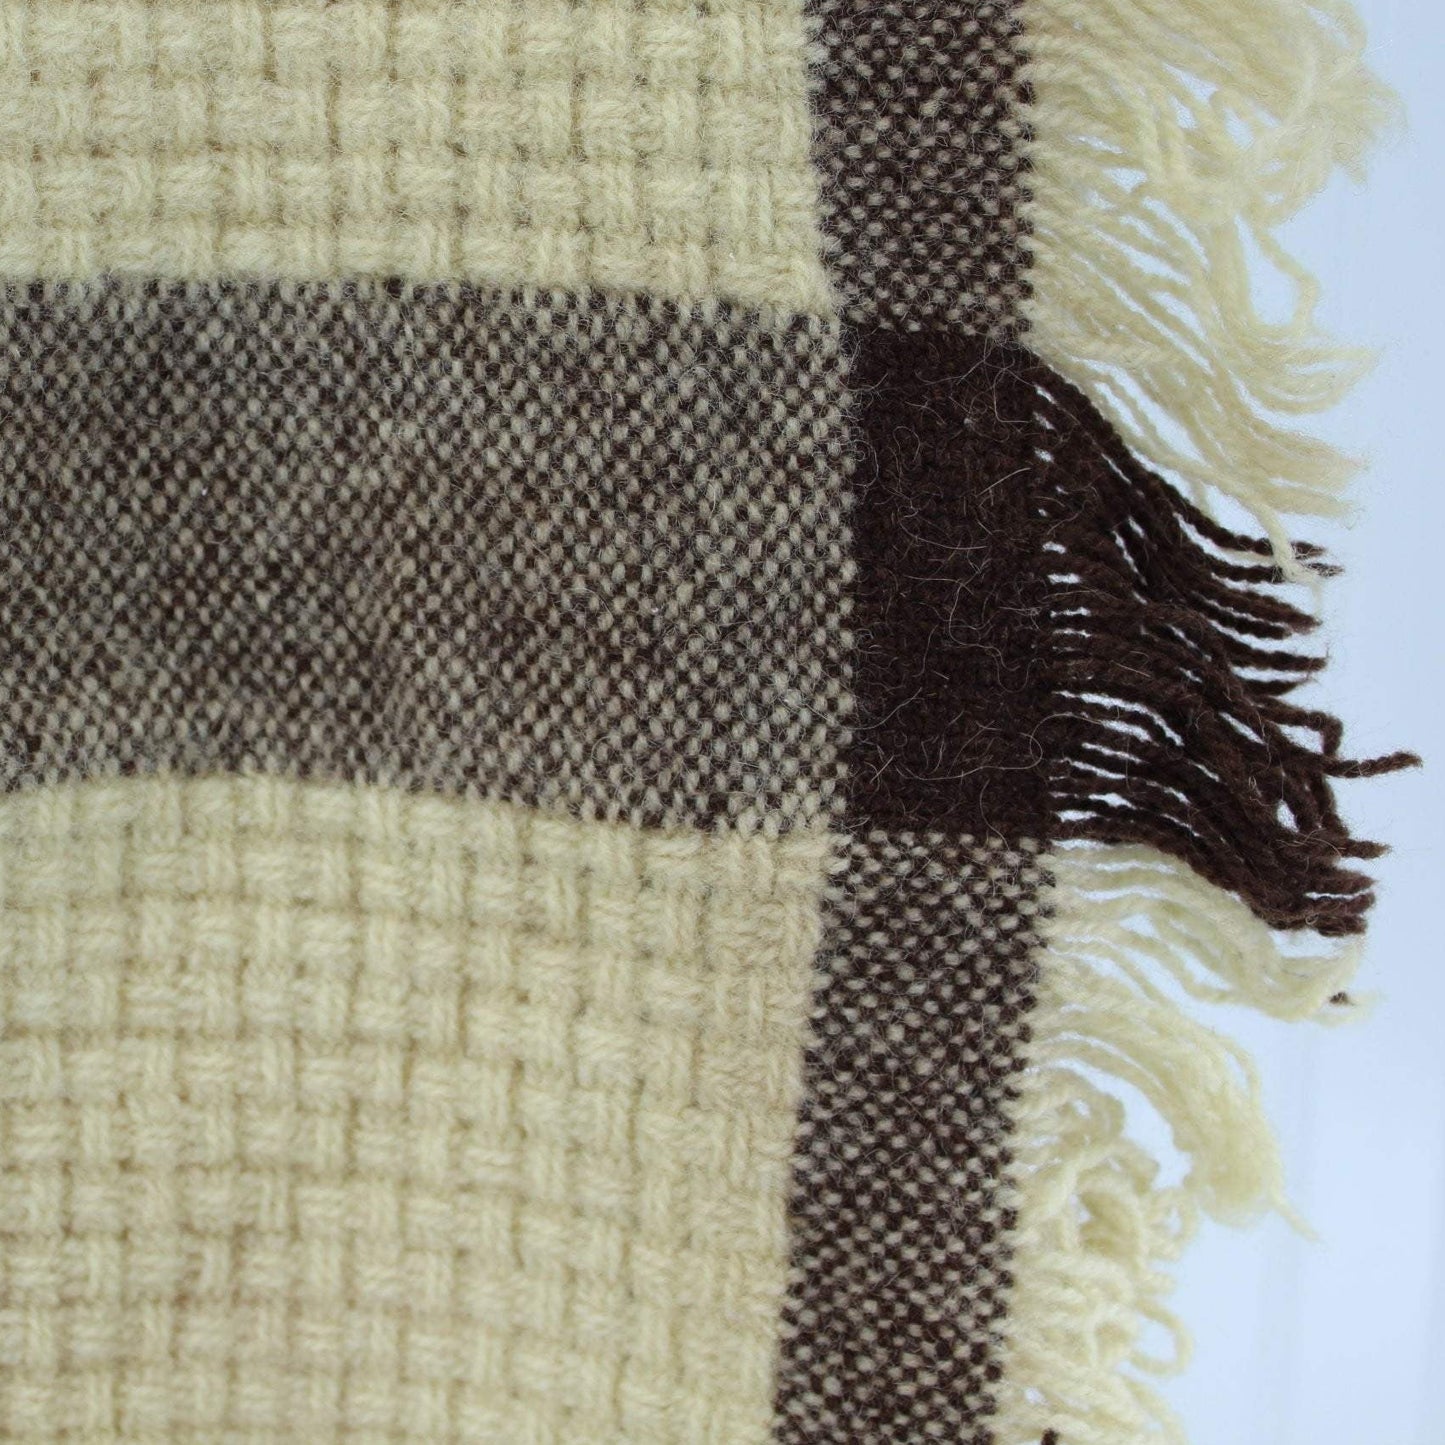 Faribo Wool Throw - Ivory & Brown Big Checks Basketweave - Special soft nice weave